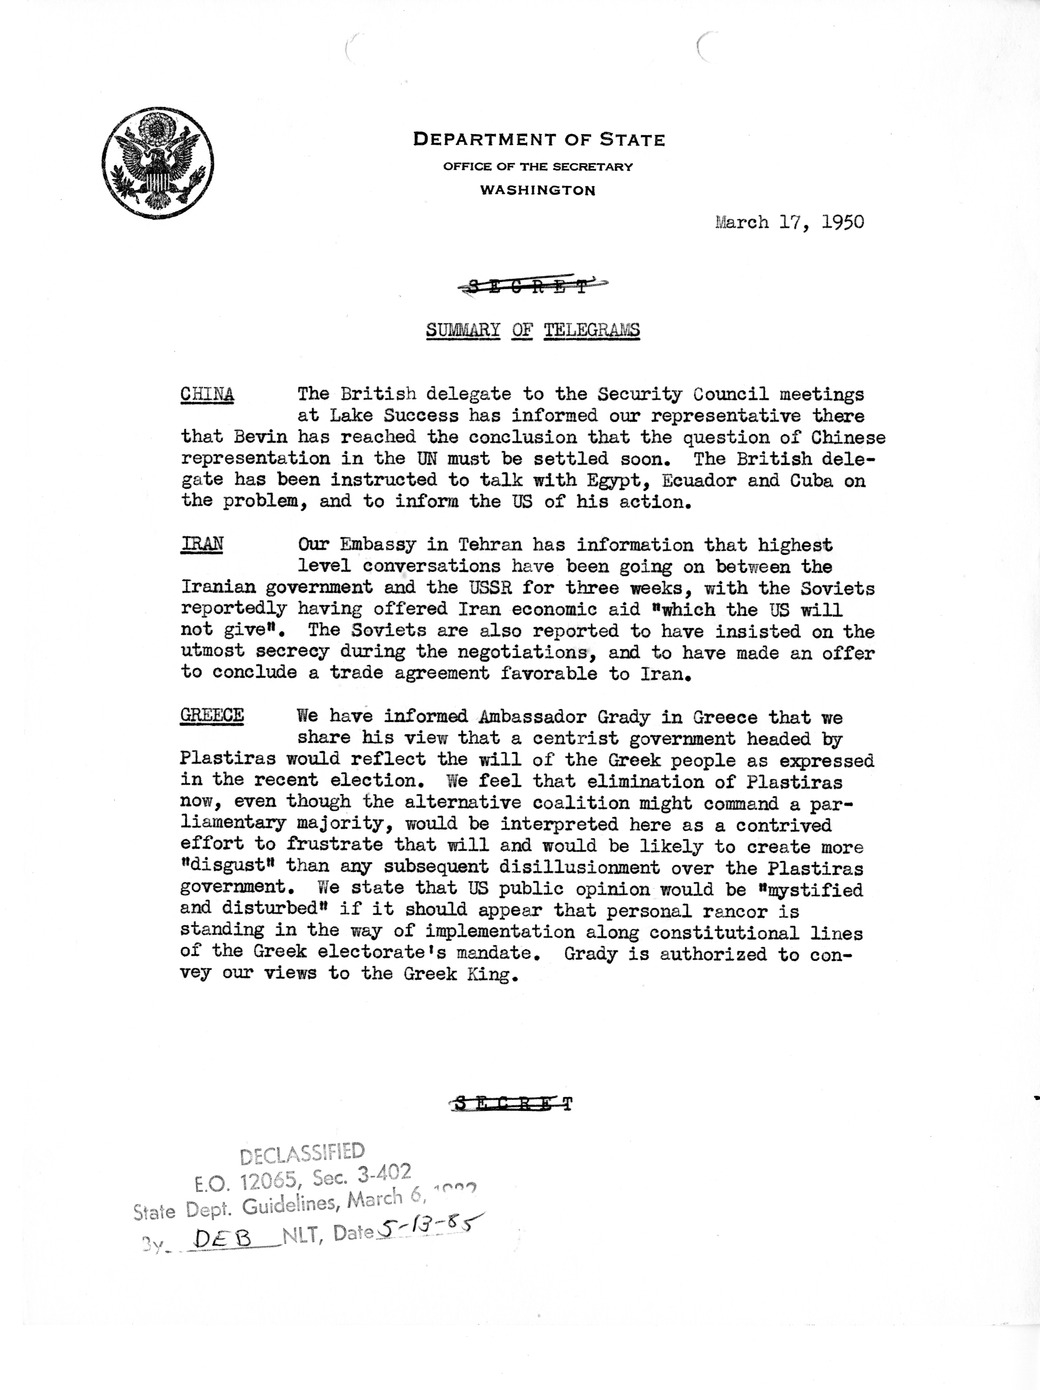 Memorandum Department of State Summary of Telegrams